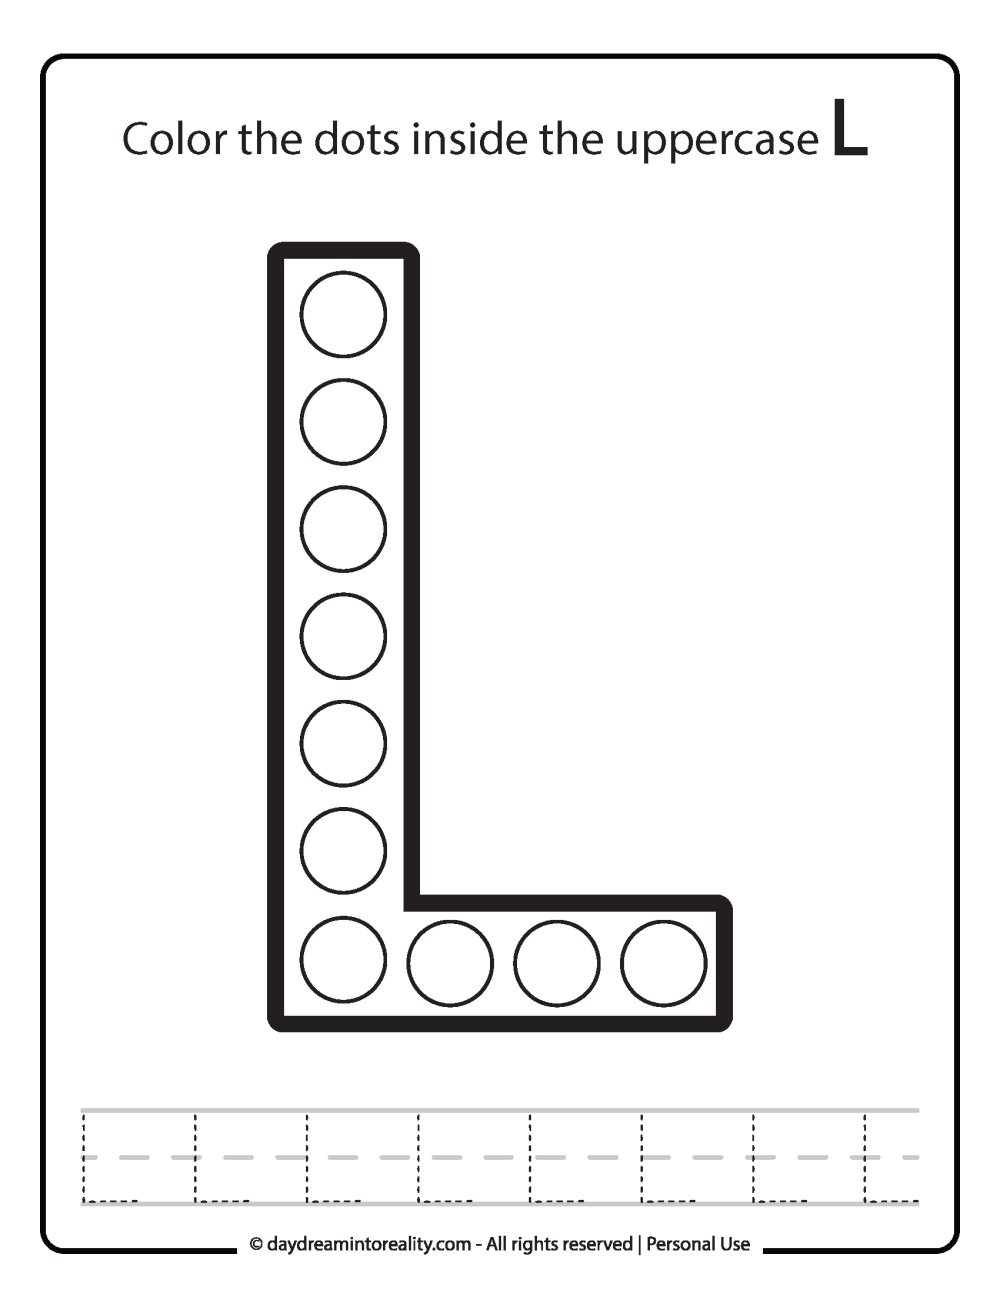 Uppercase "L" Dot Marker Worksheet Free Printable activity for kids (preschool, kindergarten).